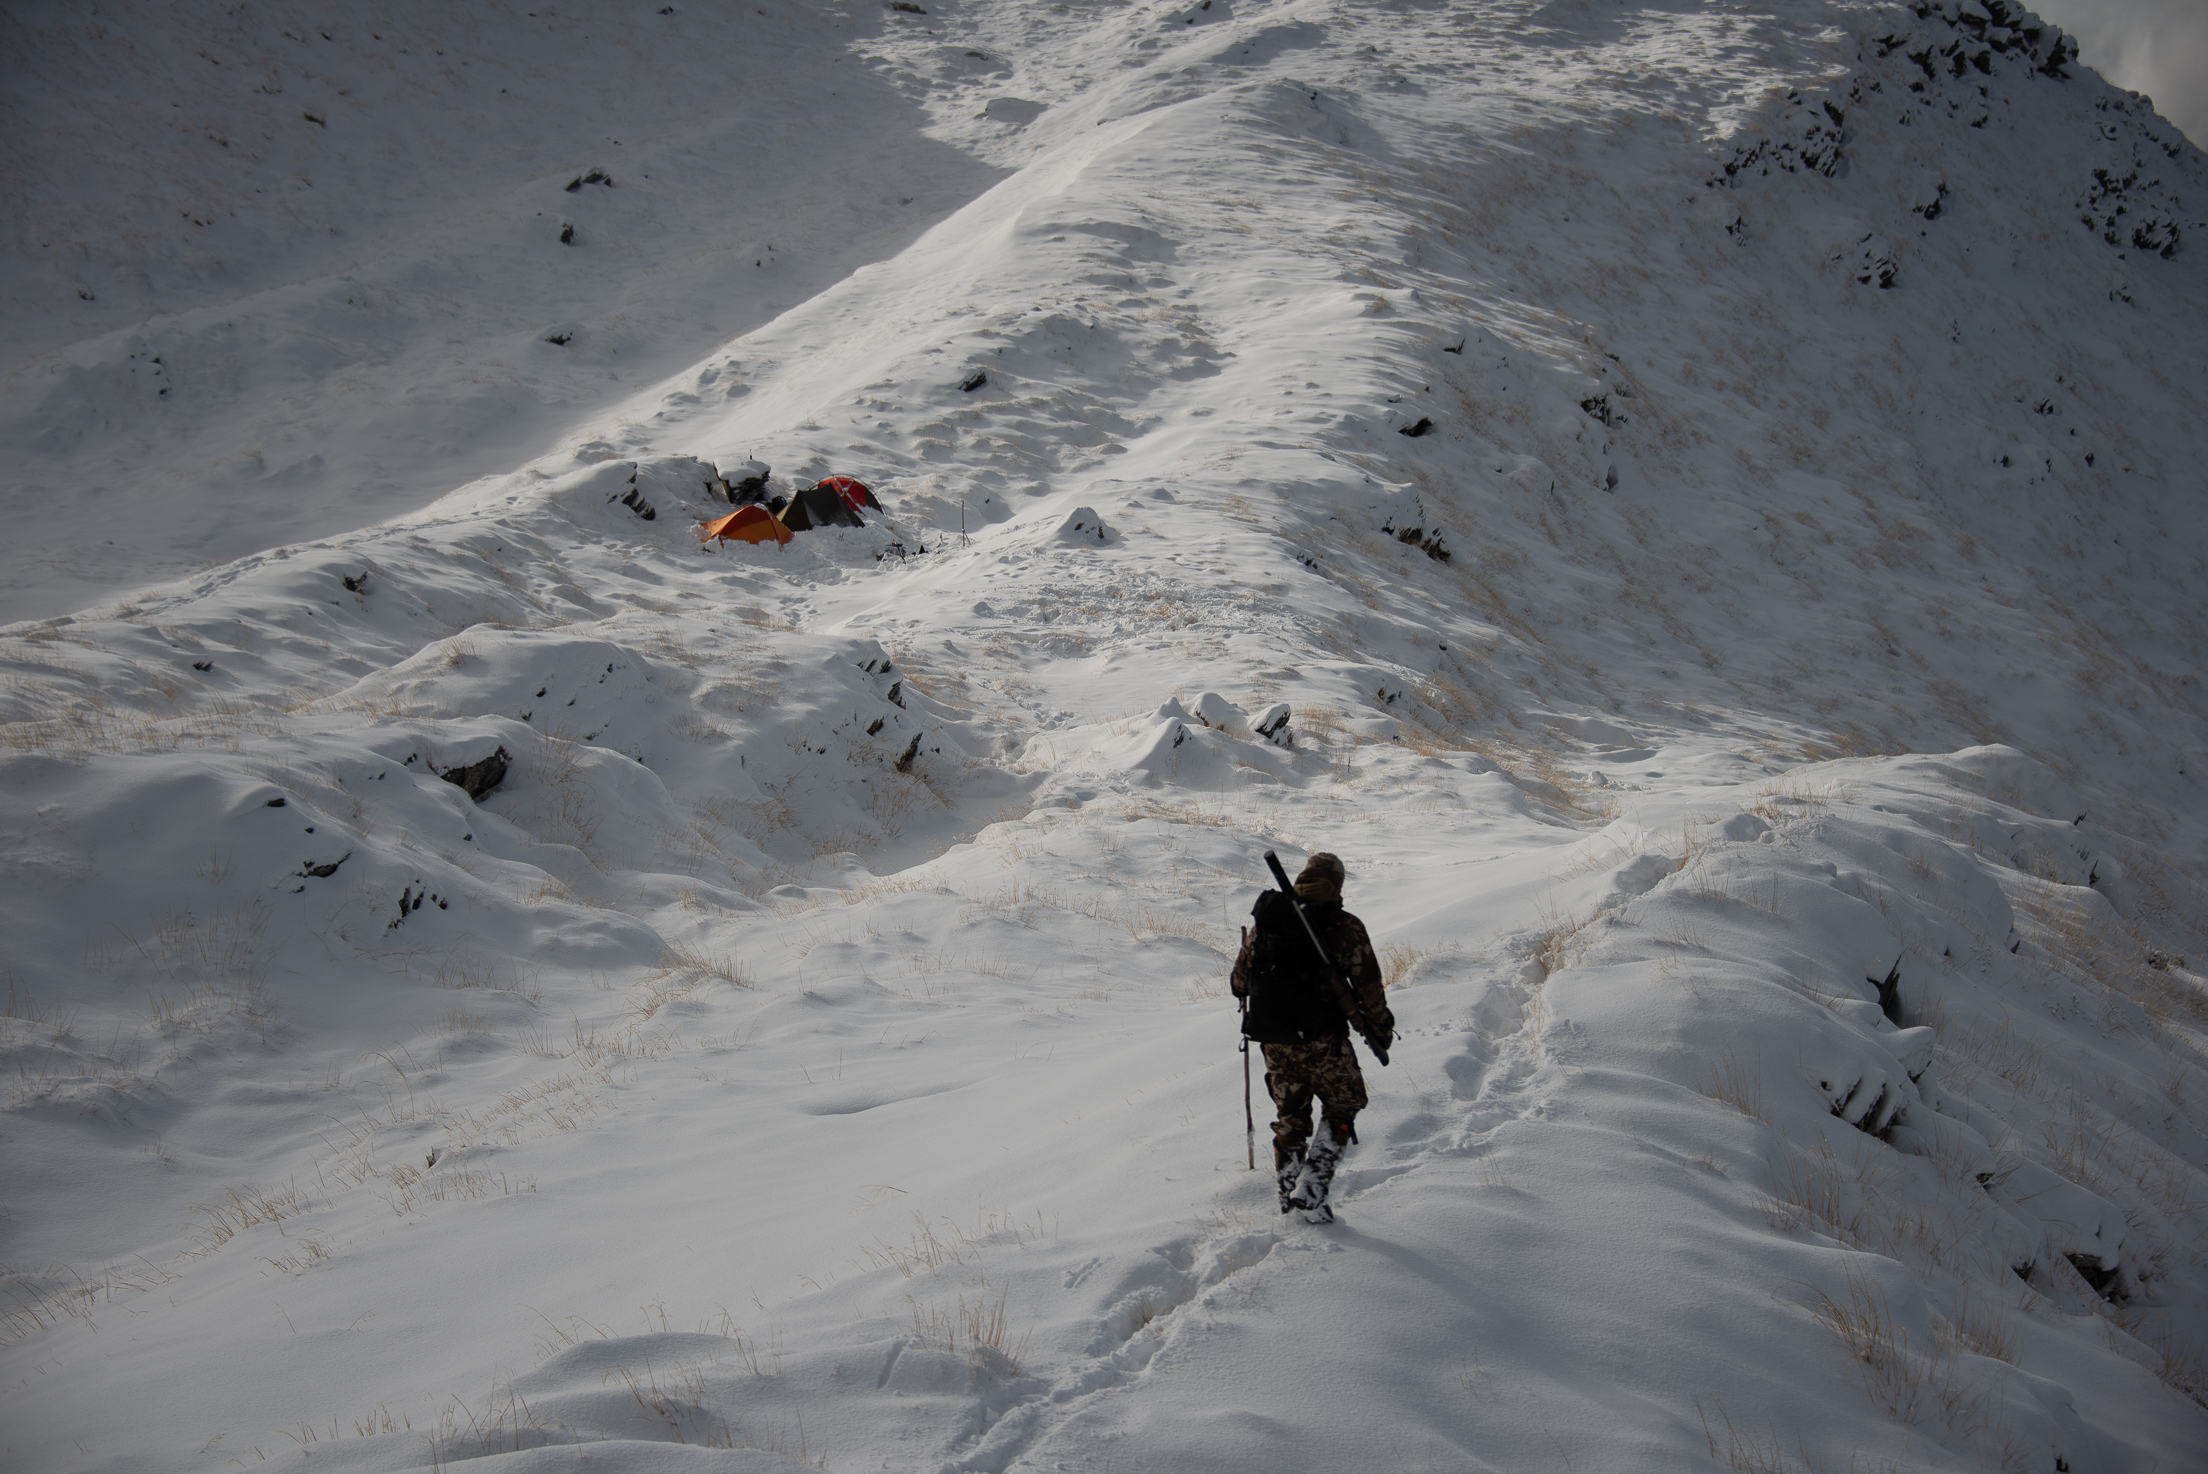  Snow camp tahr hunting Image @ Sean Powell 